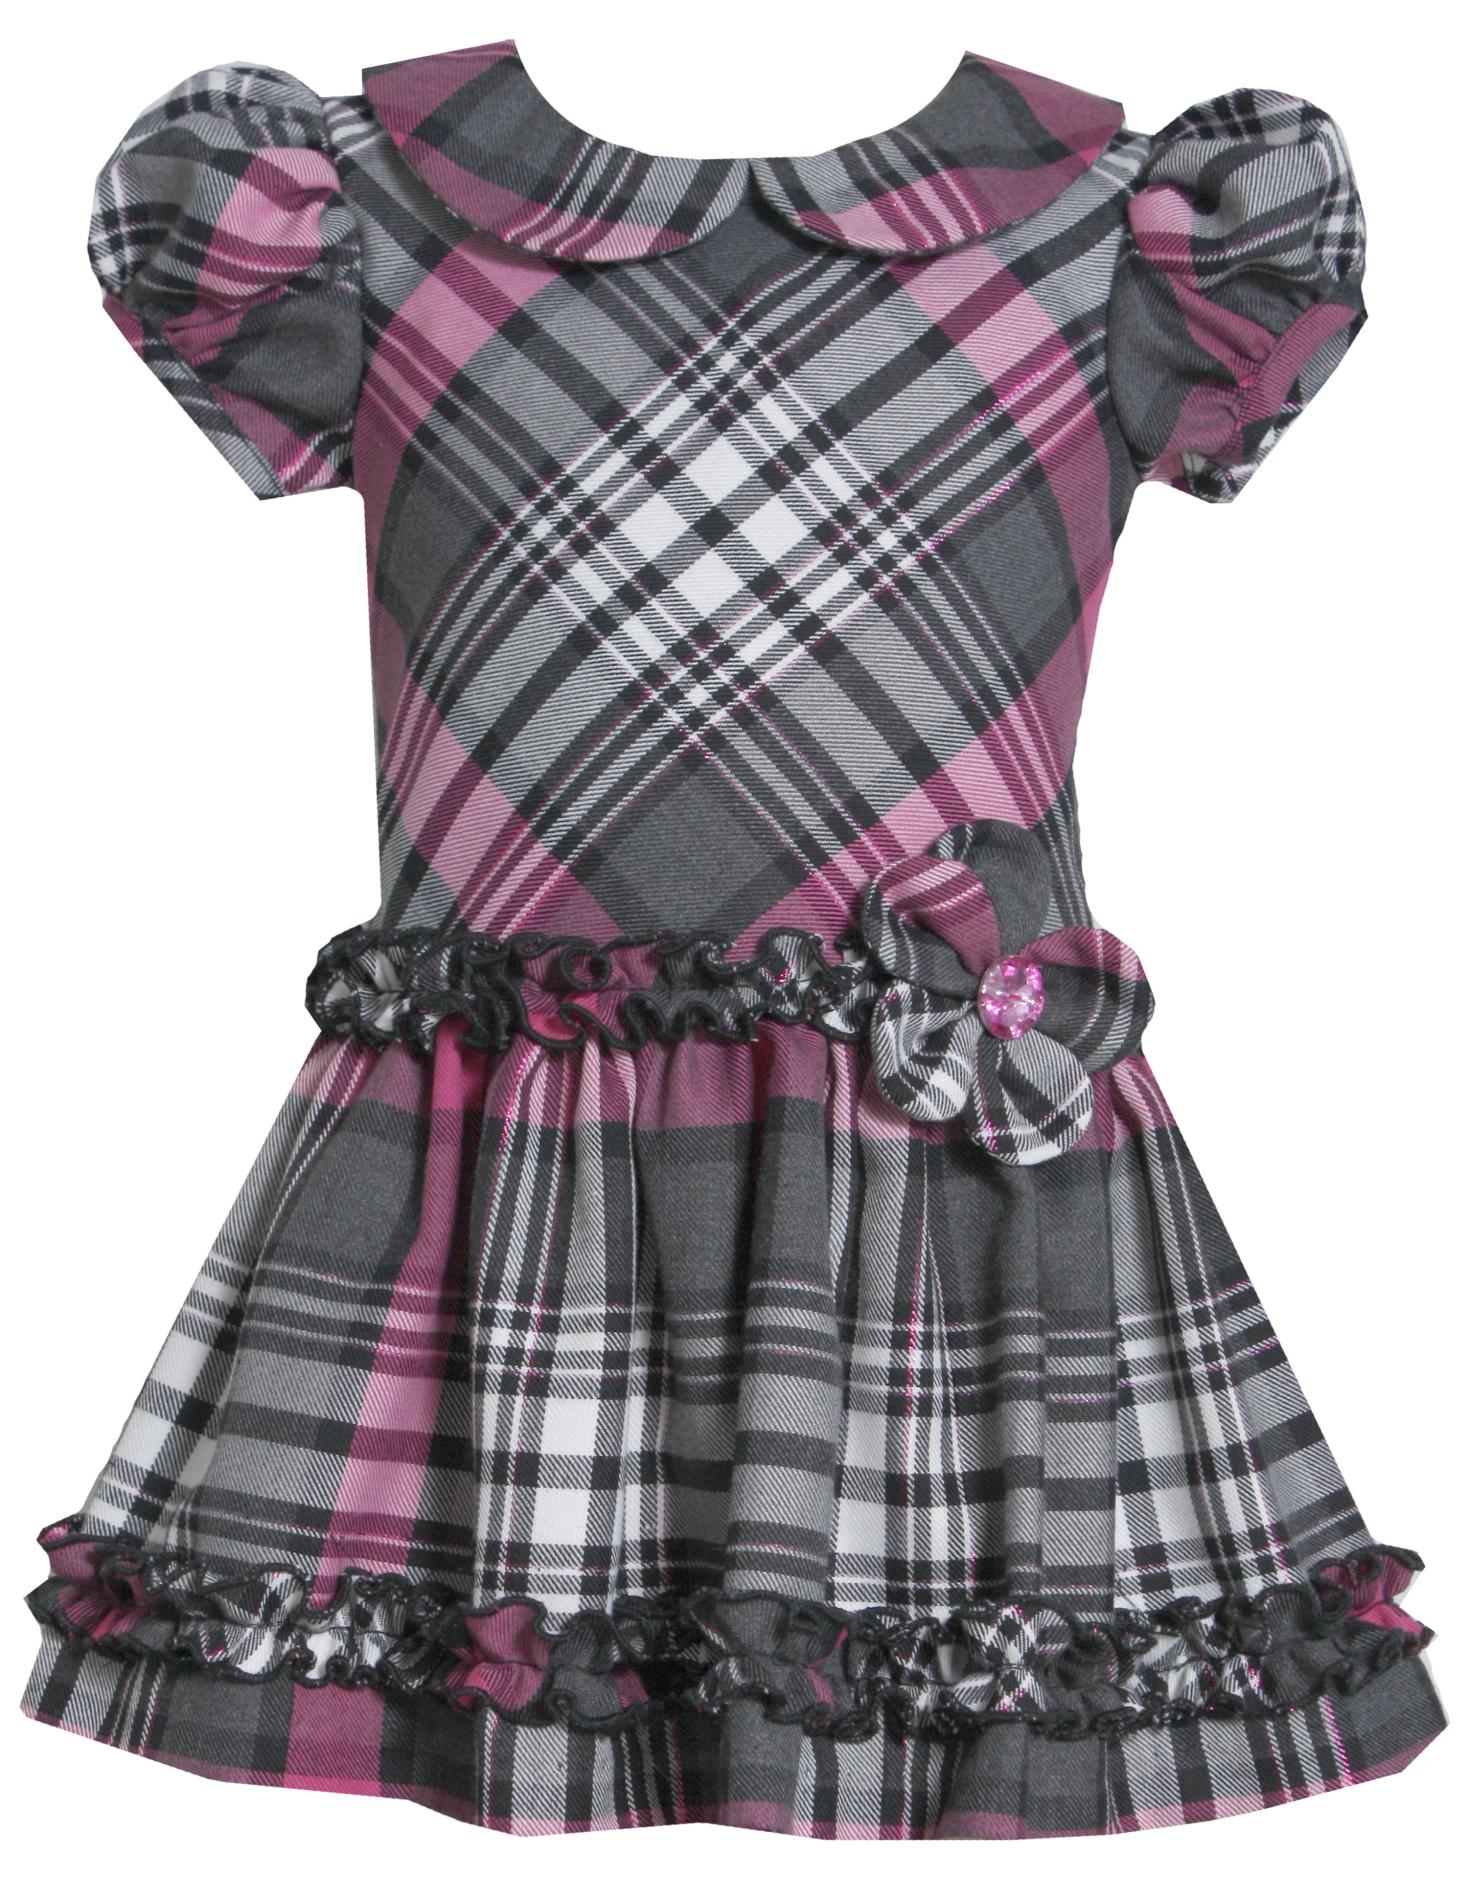 Ashley Ann Infant & Toddler Girl's Short-Sleeve Party Dress - Plaid